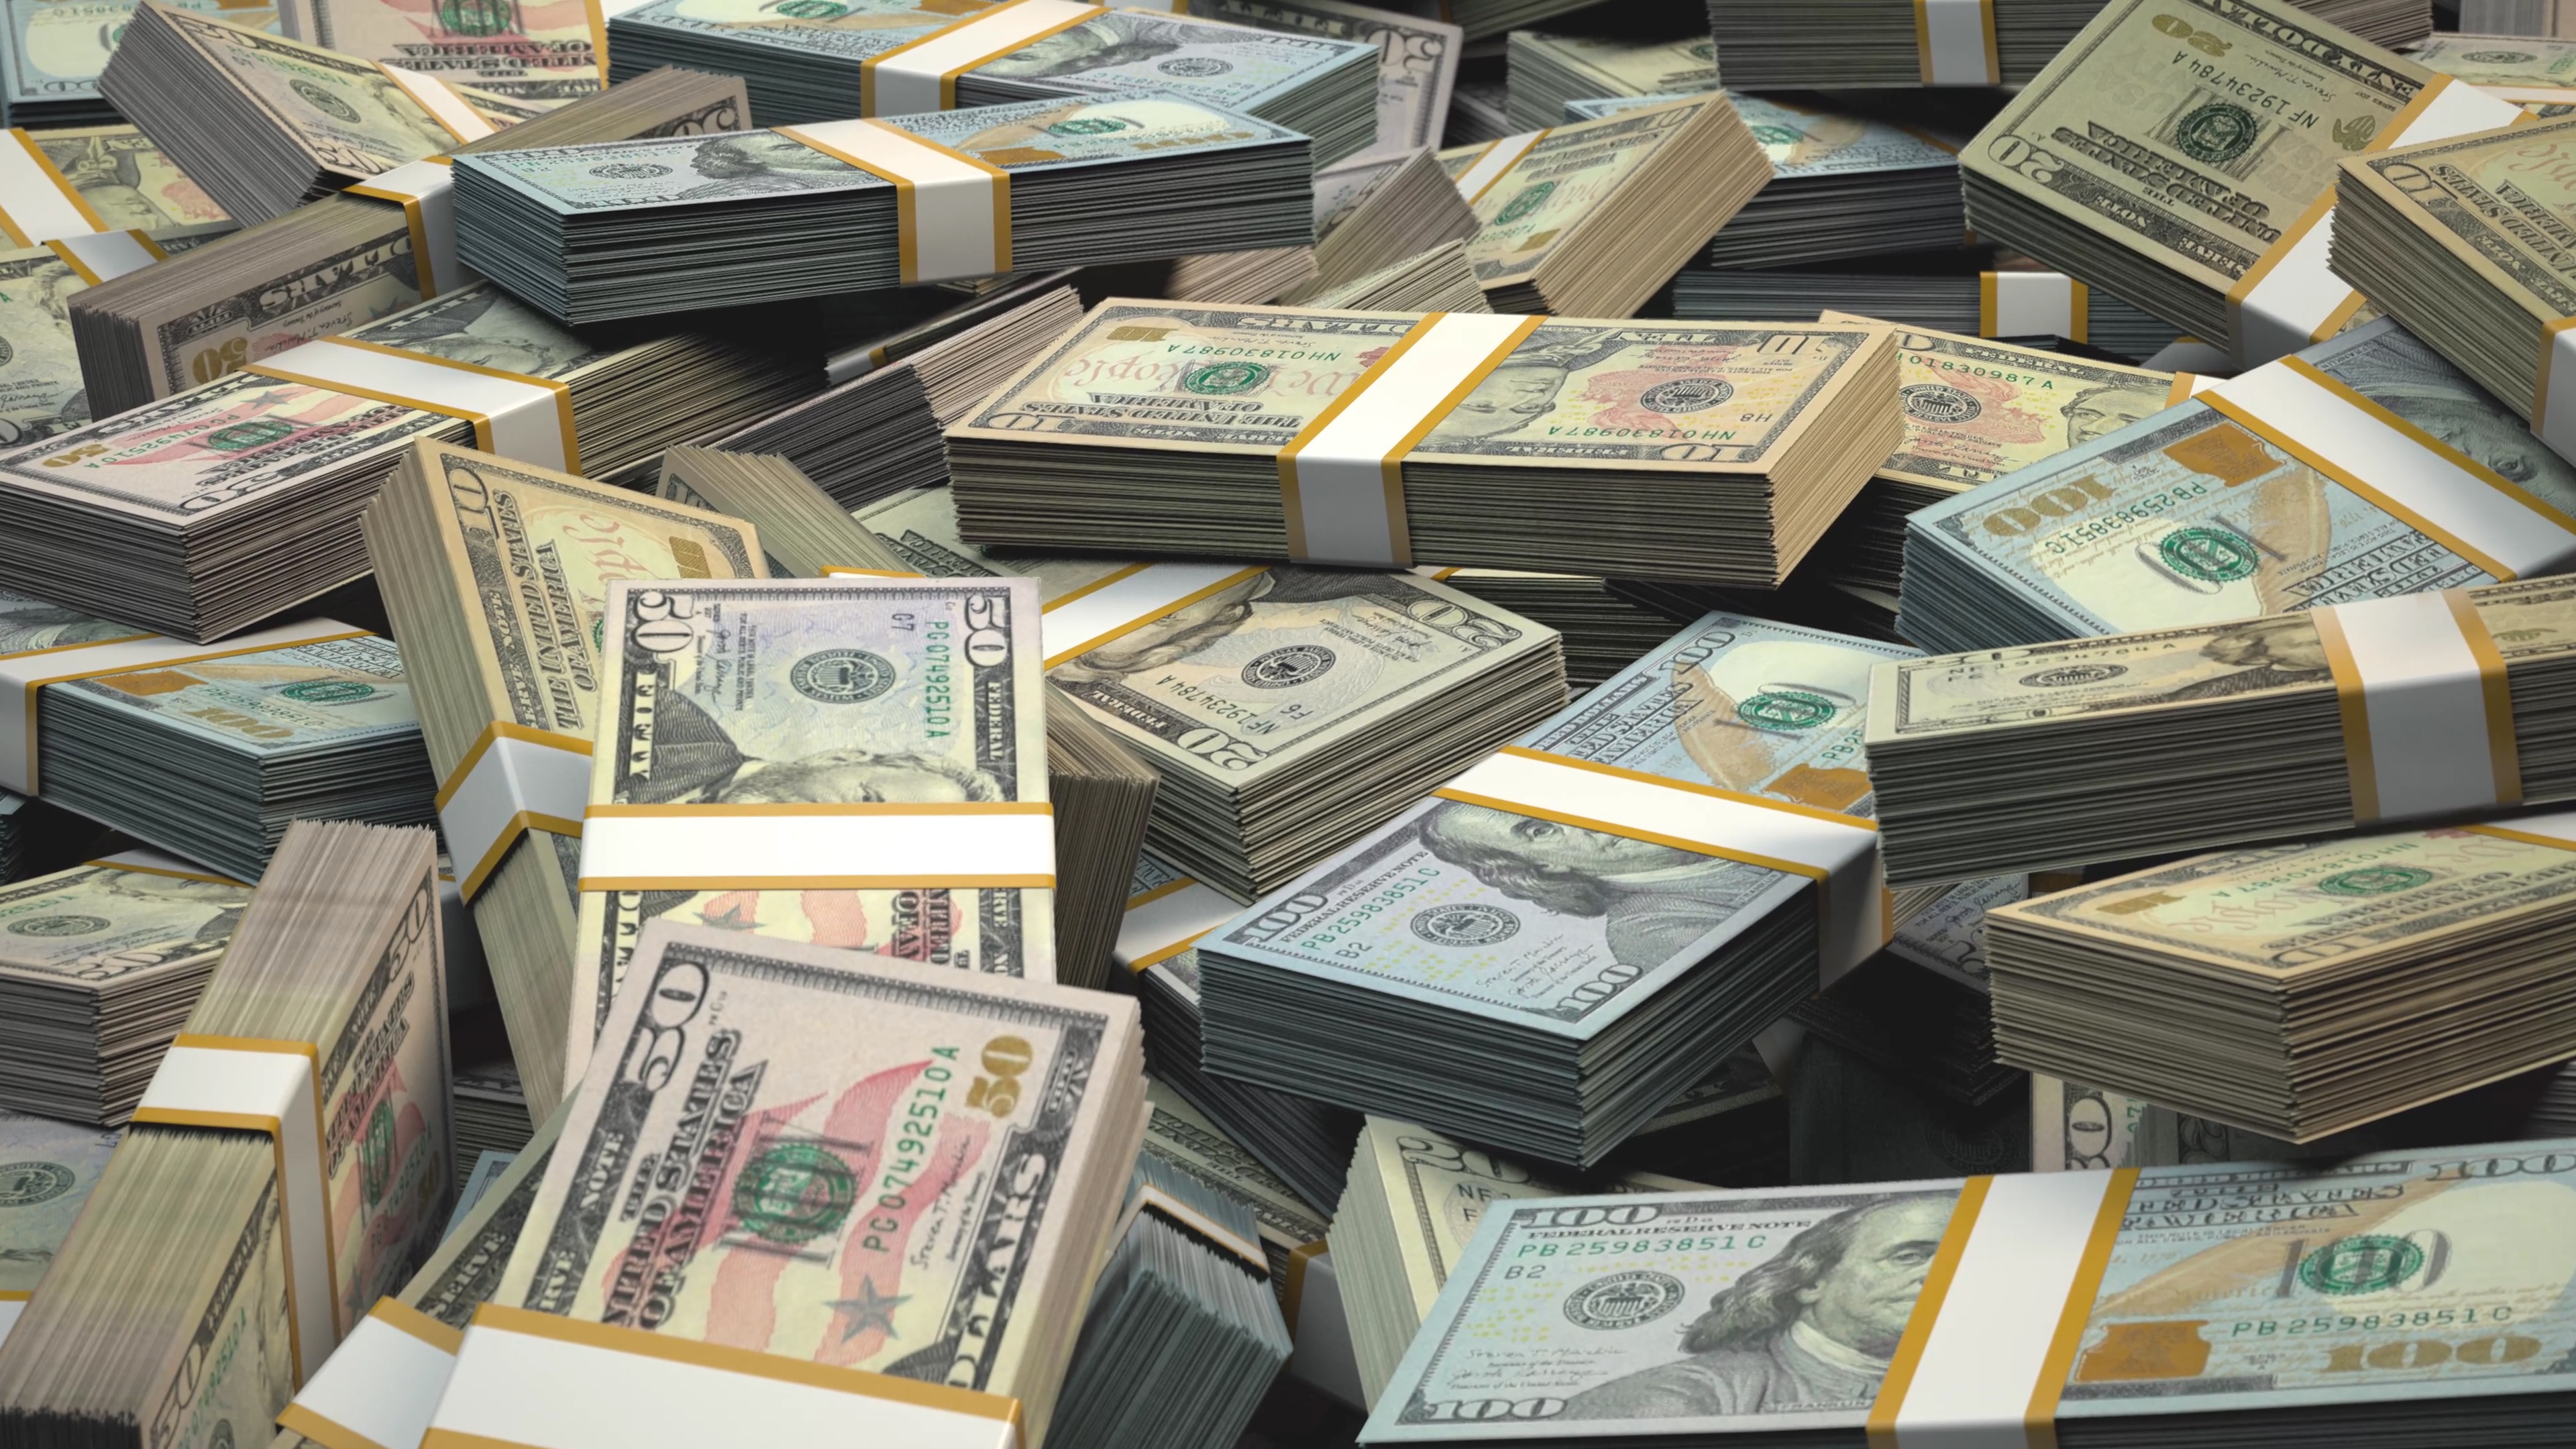 Stacks of various US dollar bills in disarray